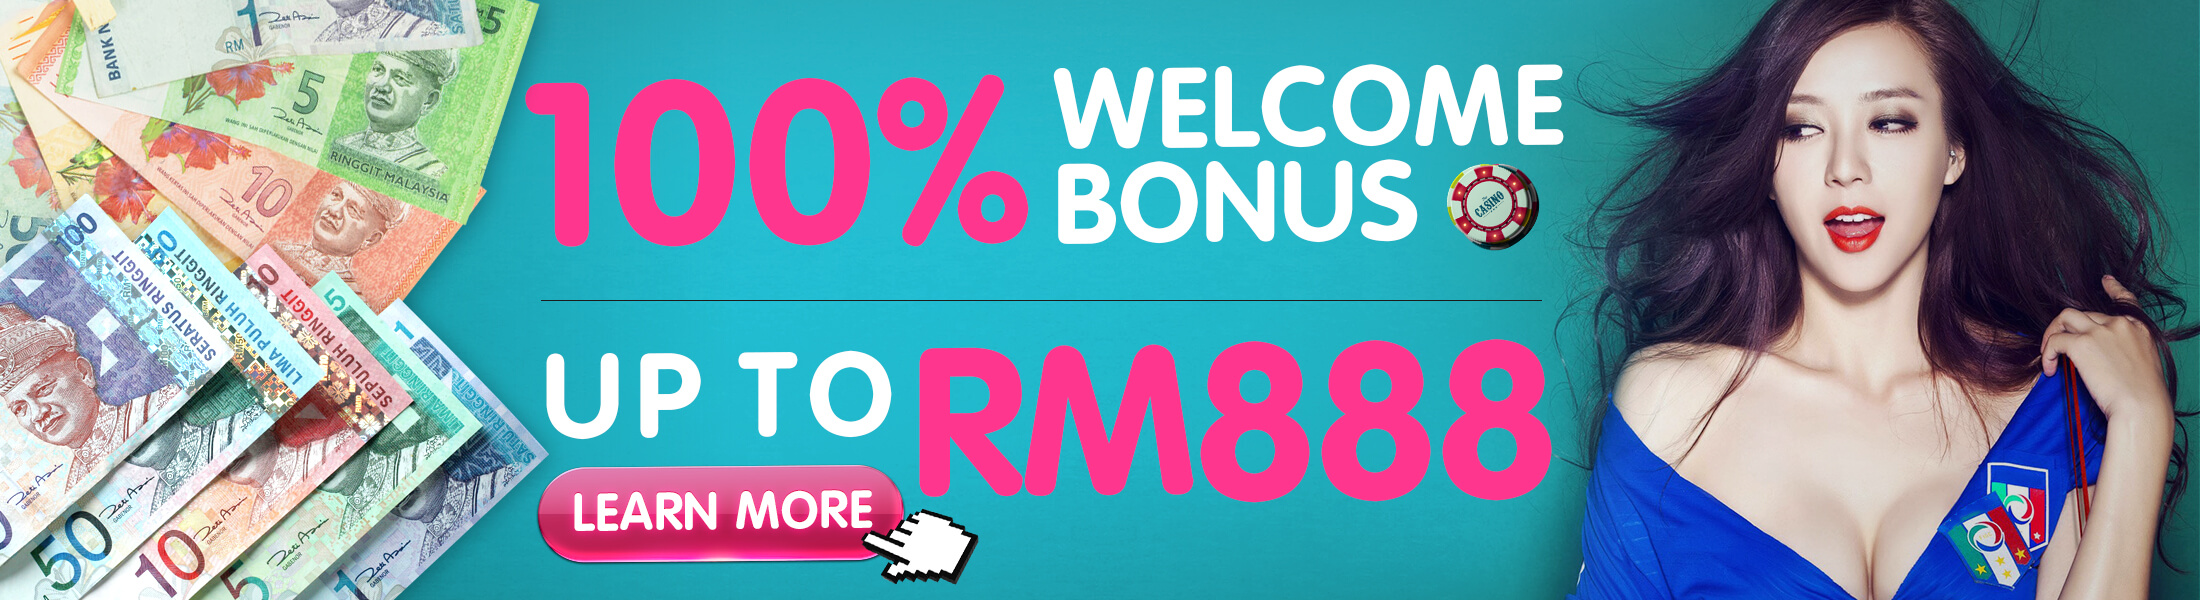 Casino Malaysia Welcome Bonus up to RM888